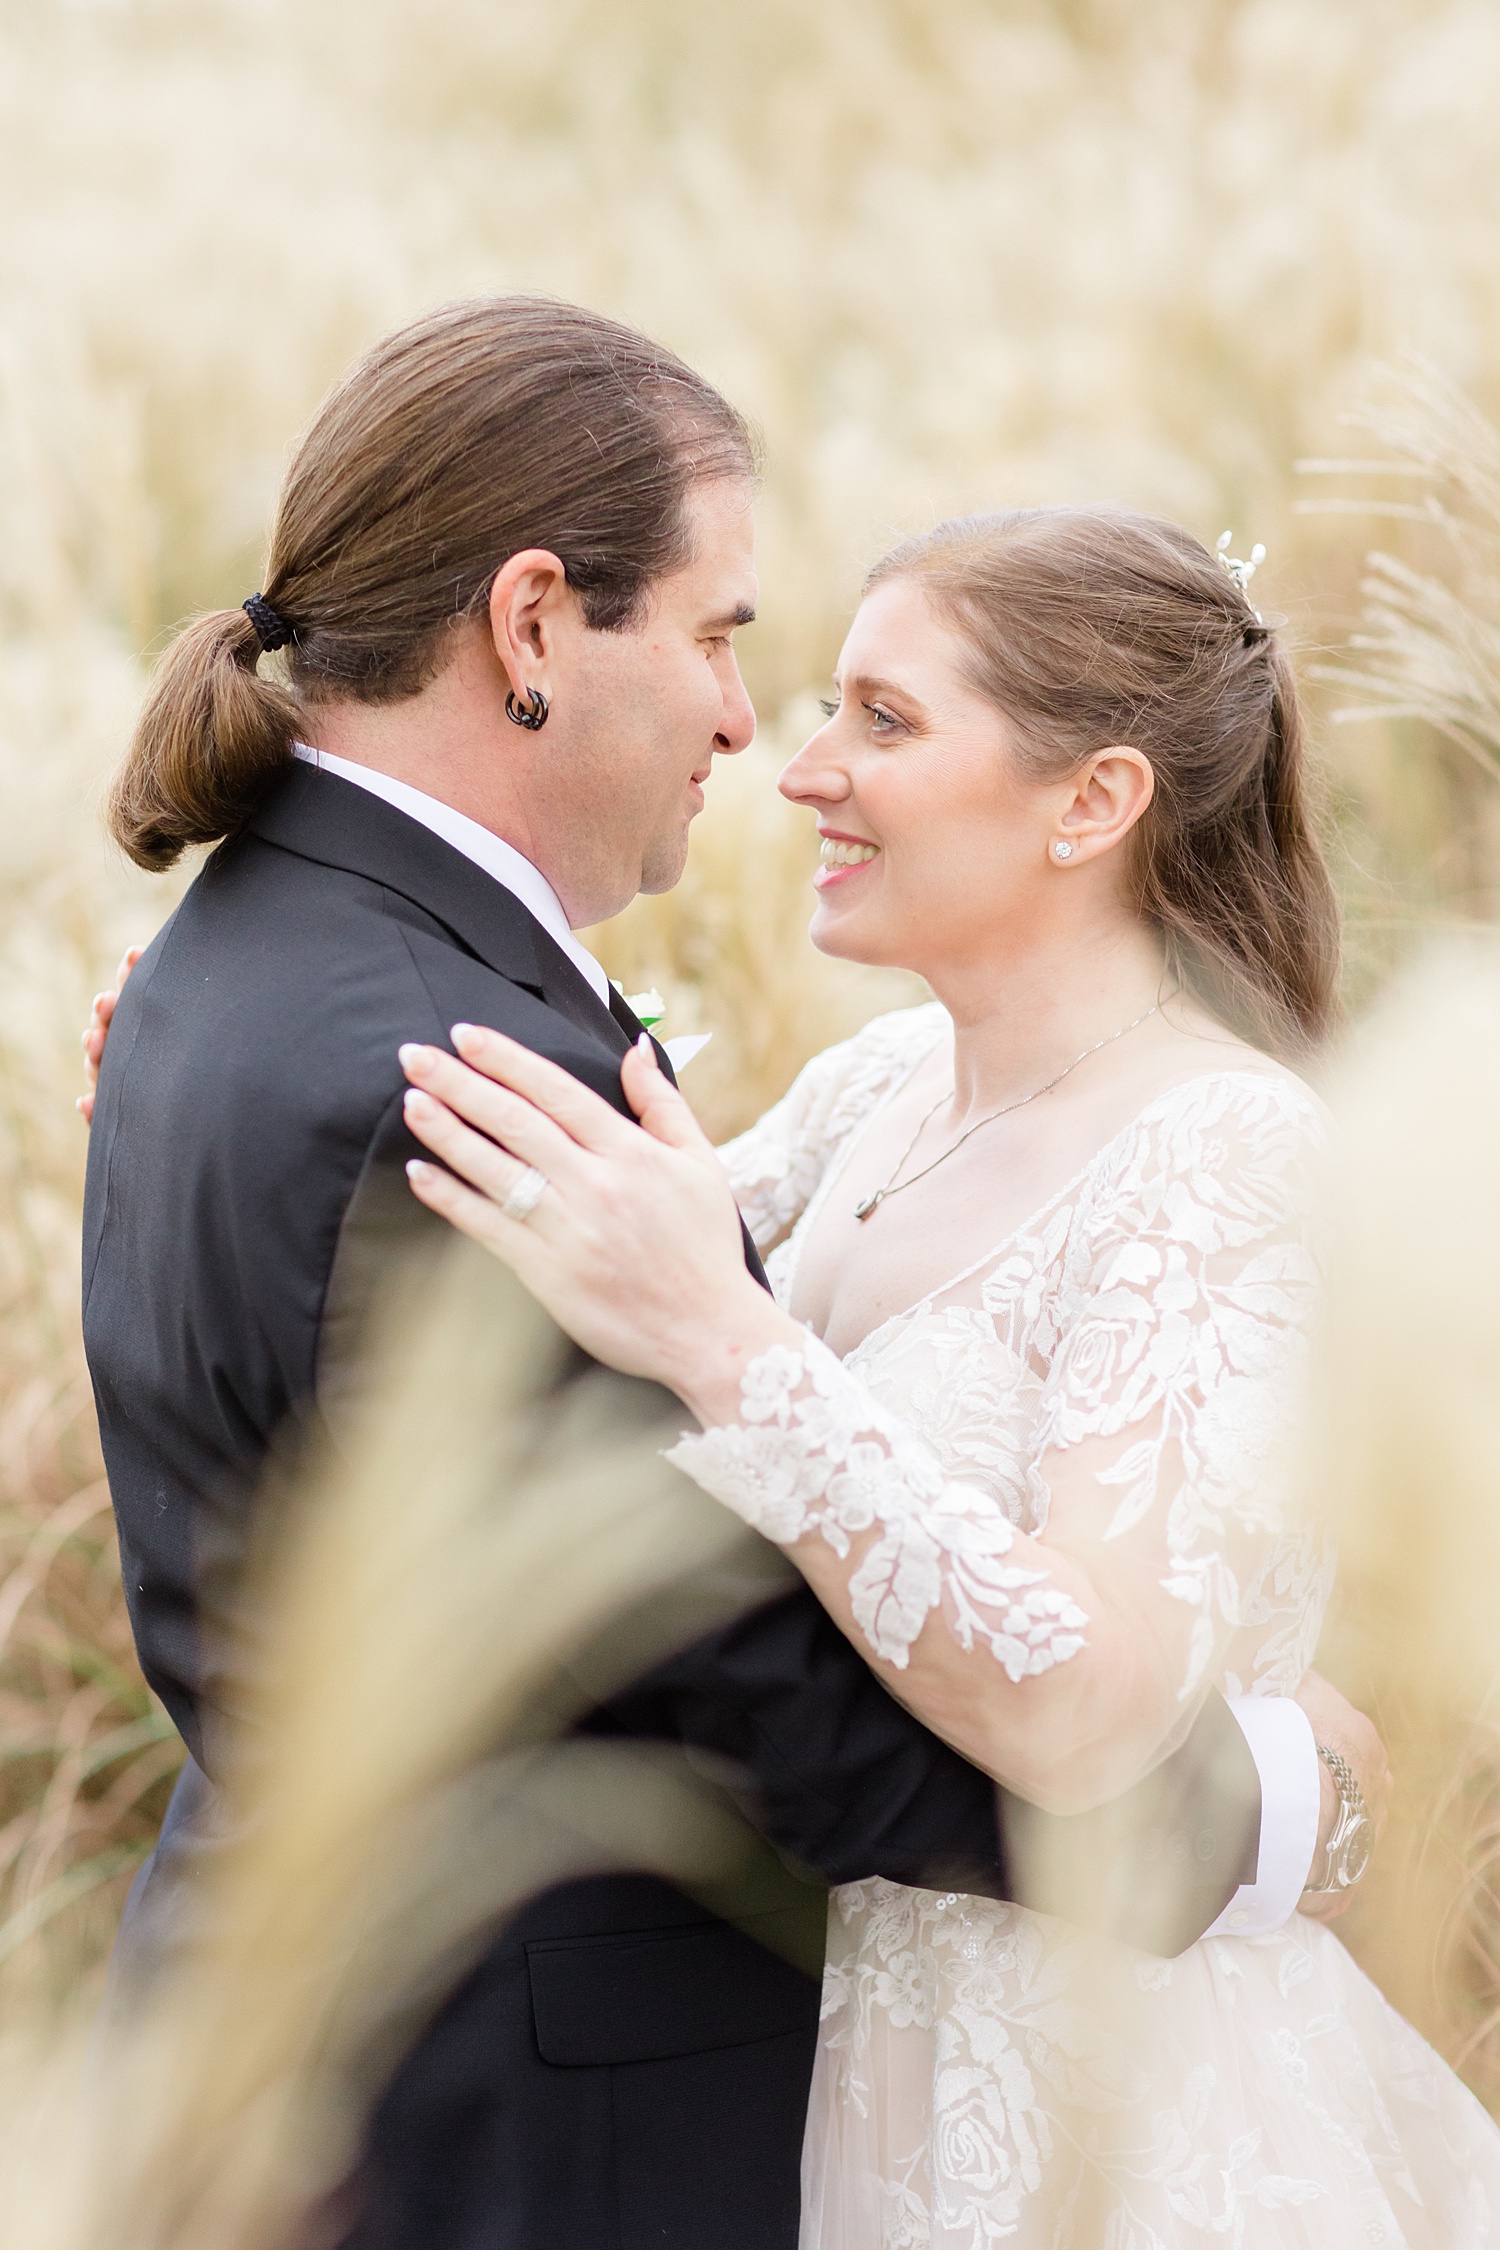 tall grass frames couple during wedding portaits